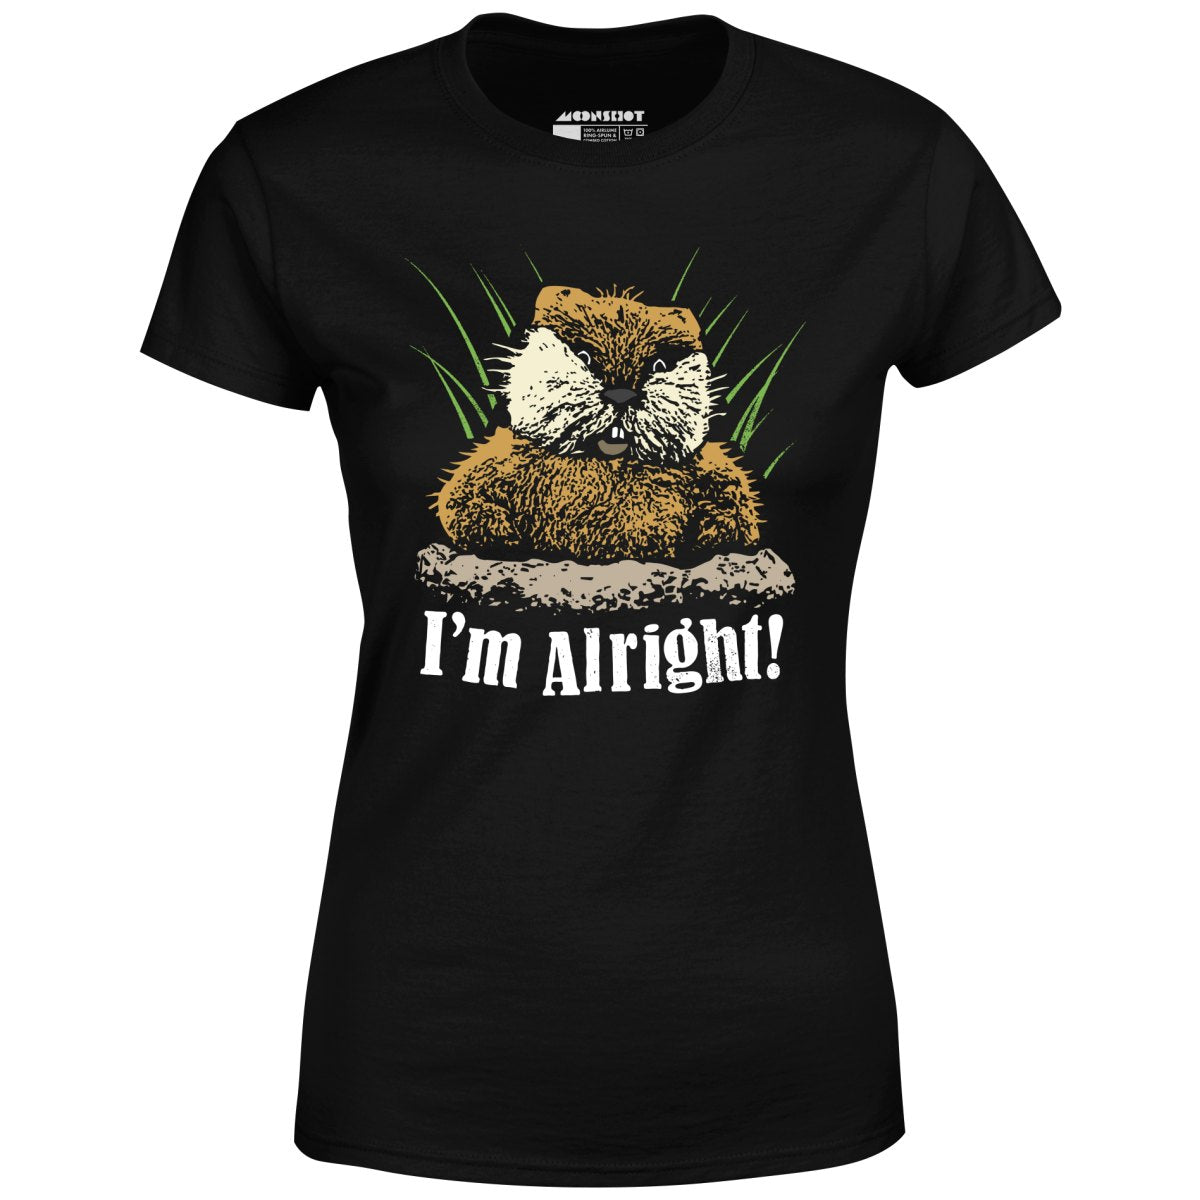 I'm Alright - Women's T-Shirt